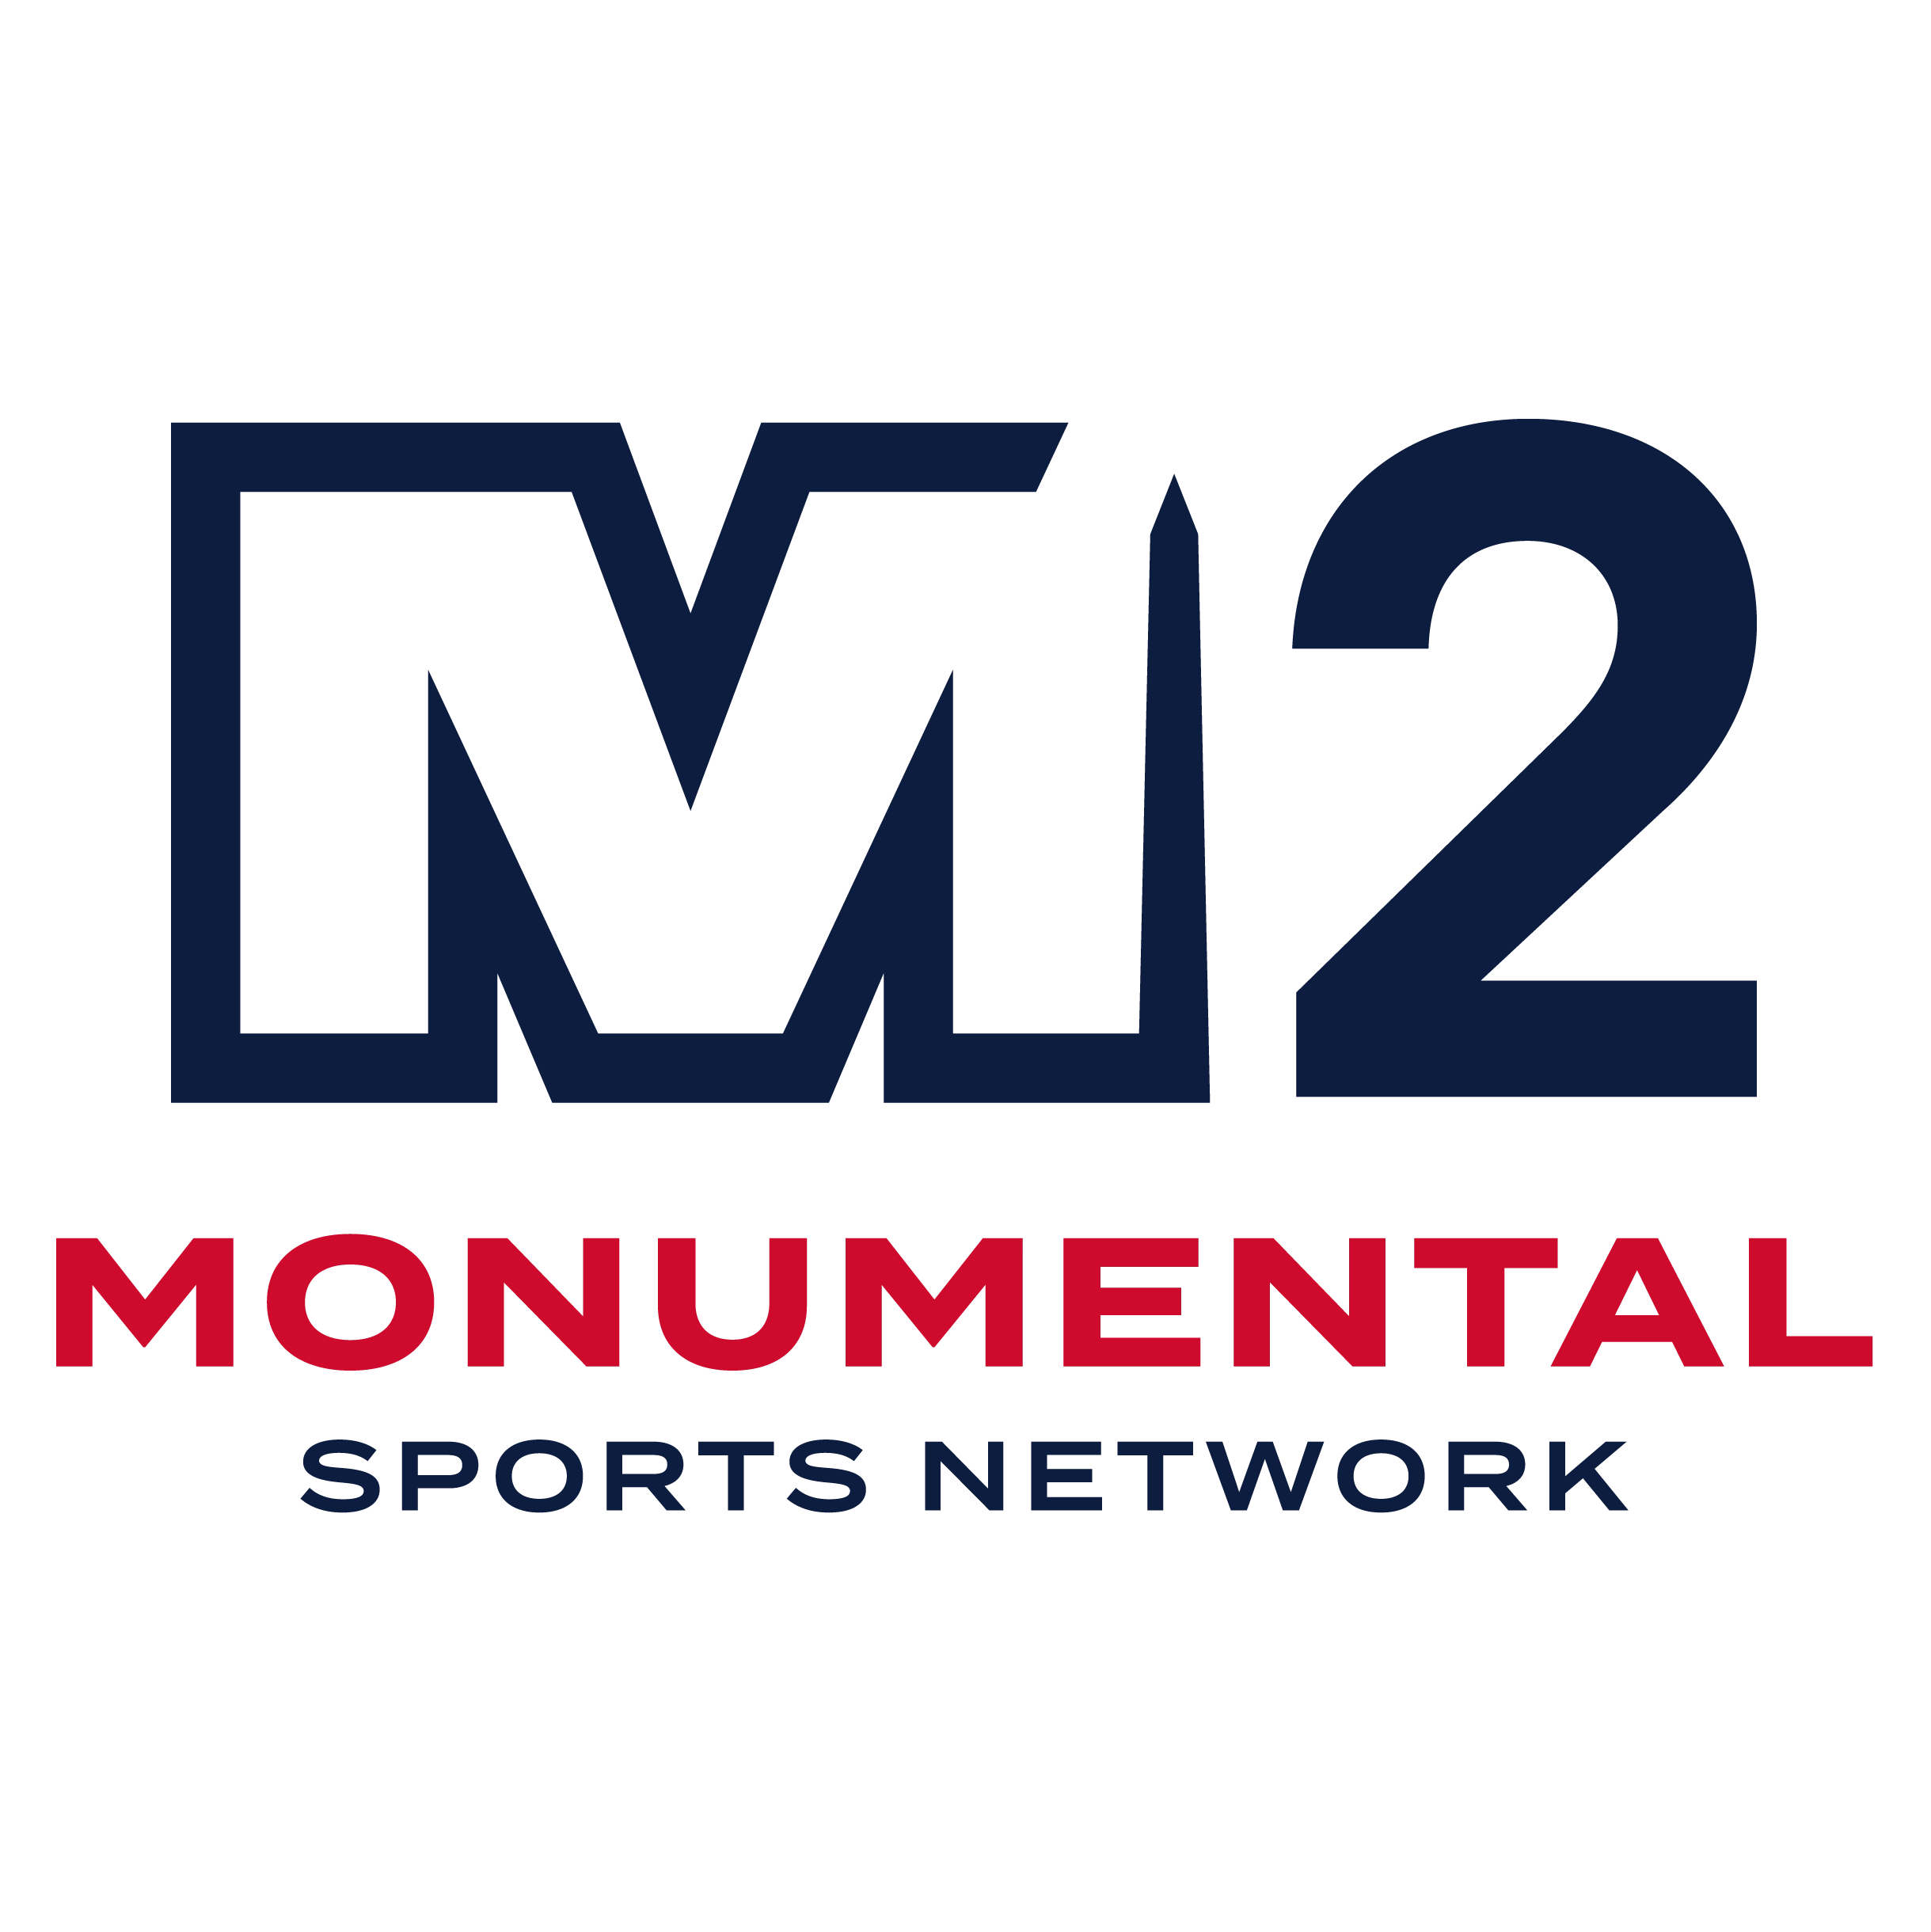 Monumental Sports Network 2 logo